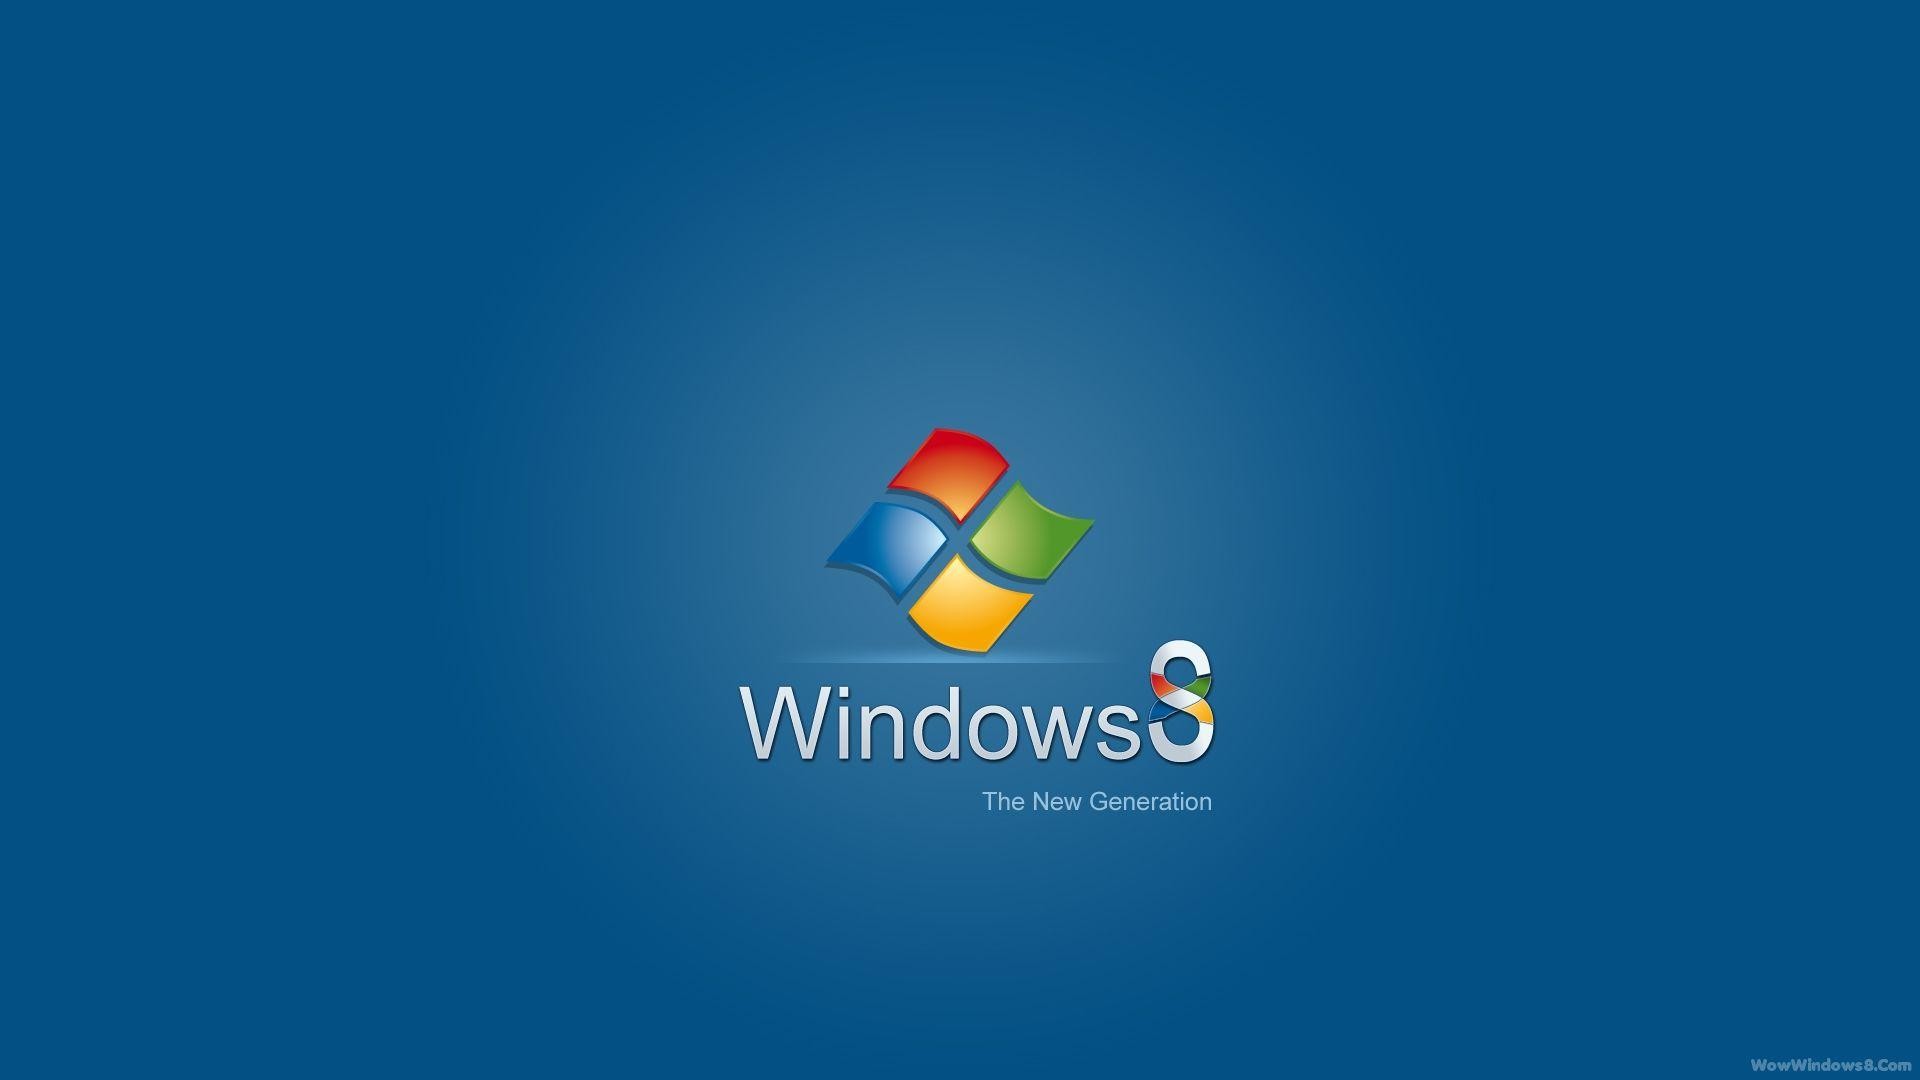 1920x1080 Windows 8 Wallpaper 2012 - Best Windows 8 Wallpapers | Arab .